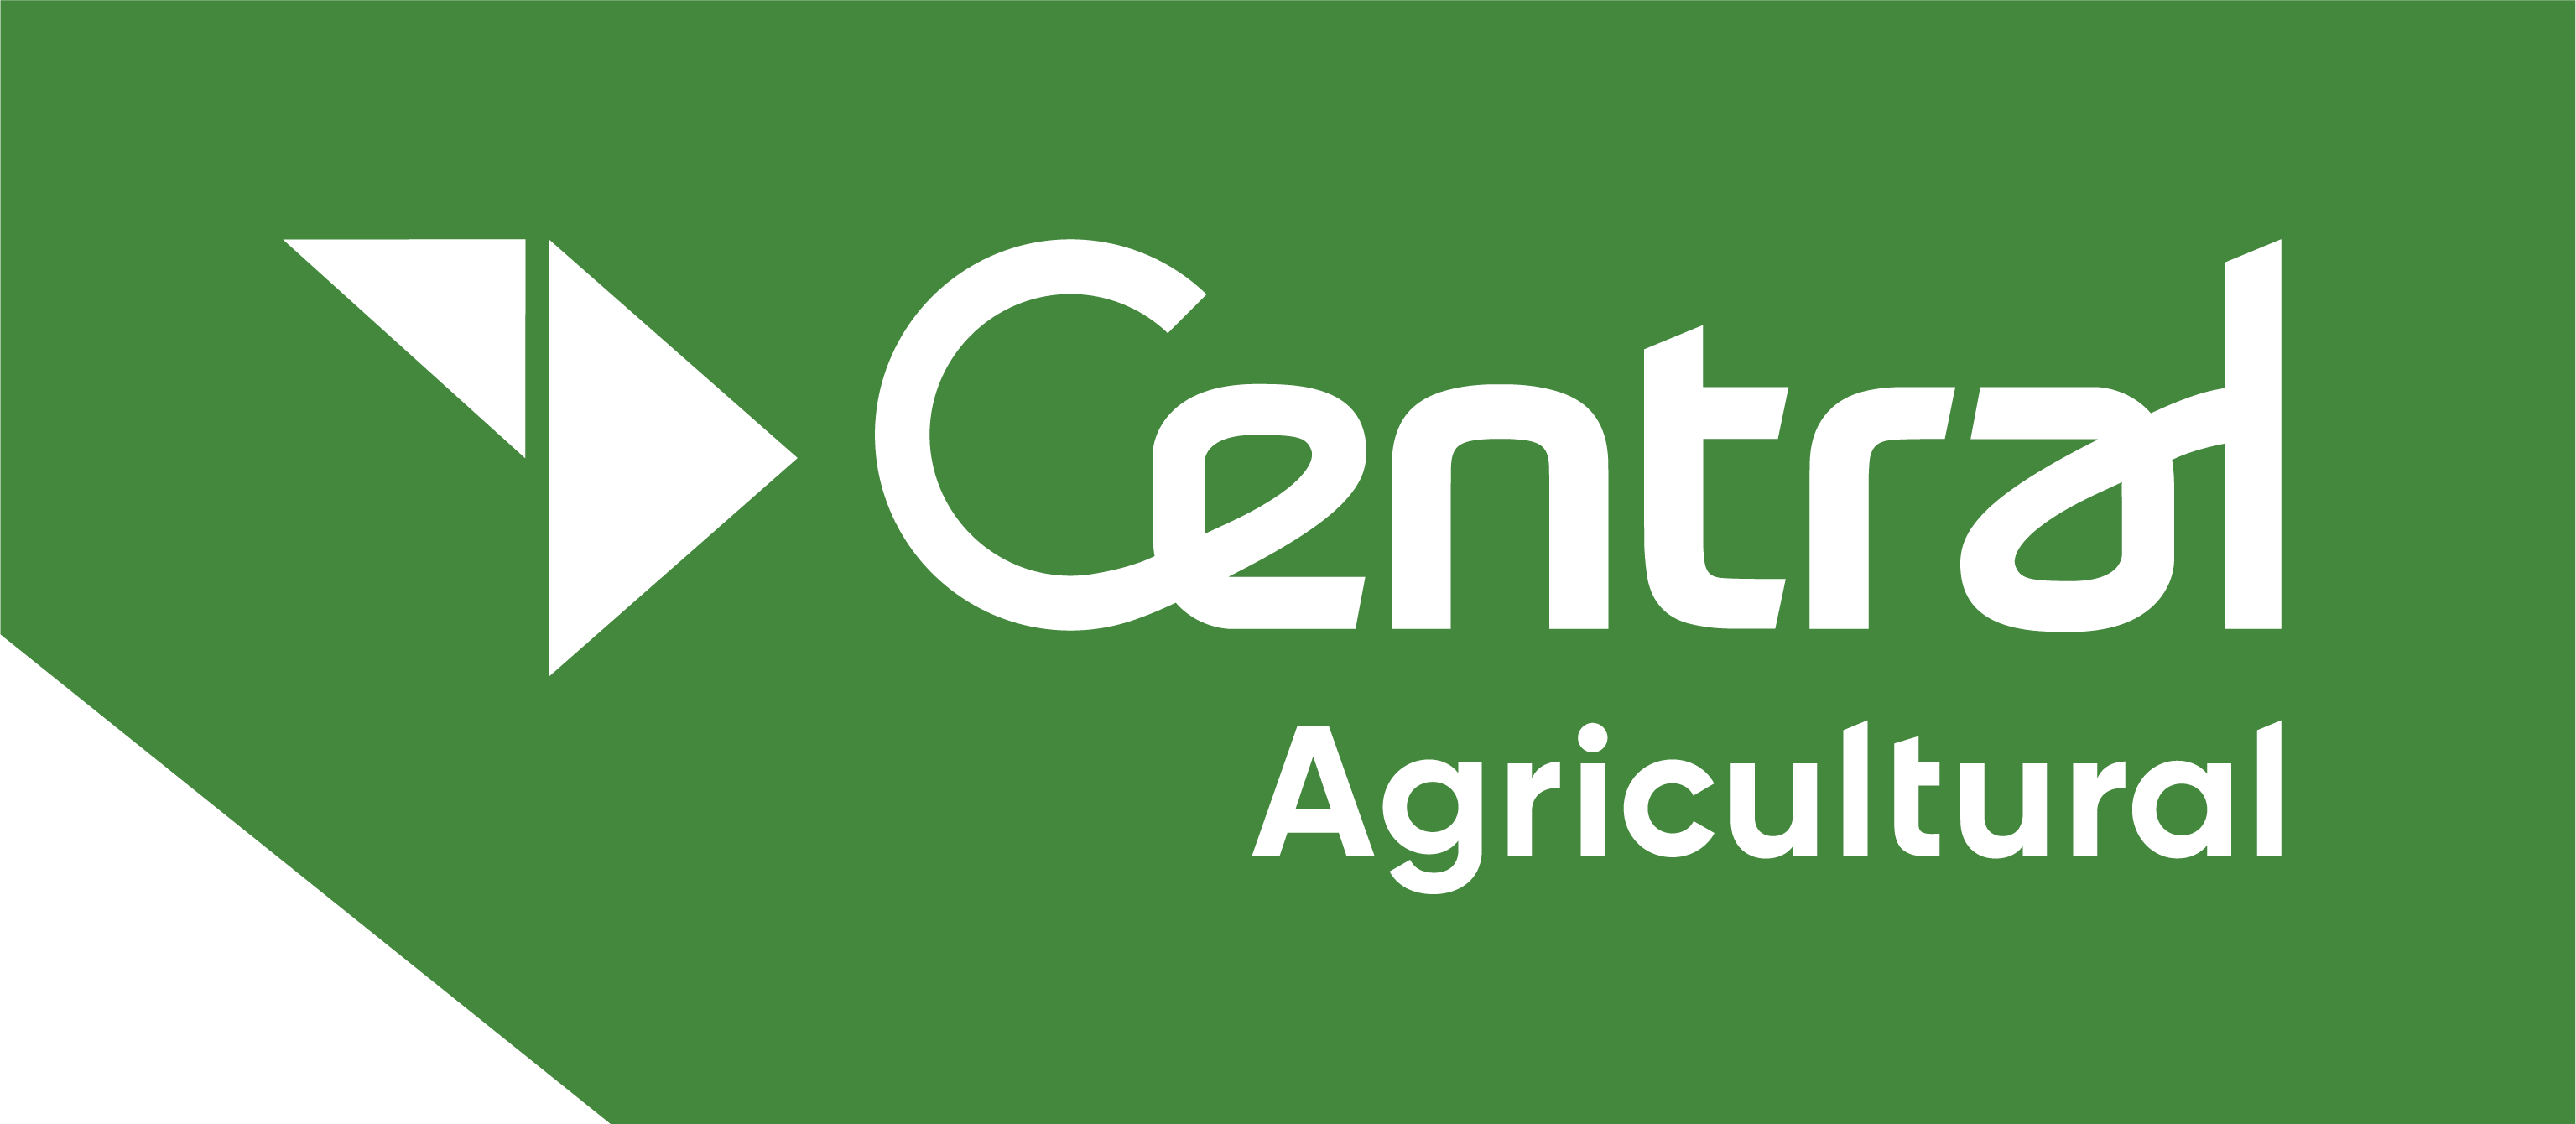 Central Agricultural